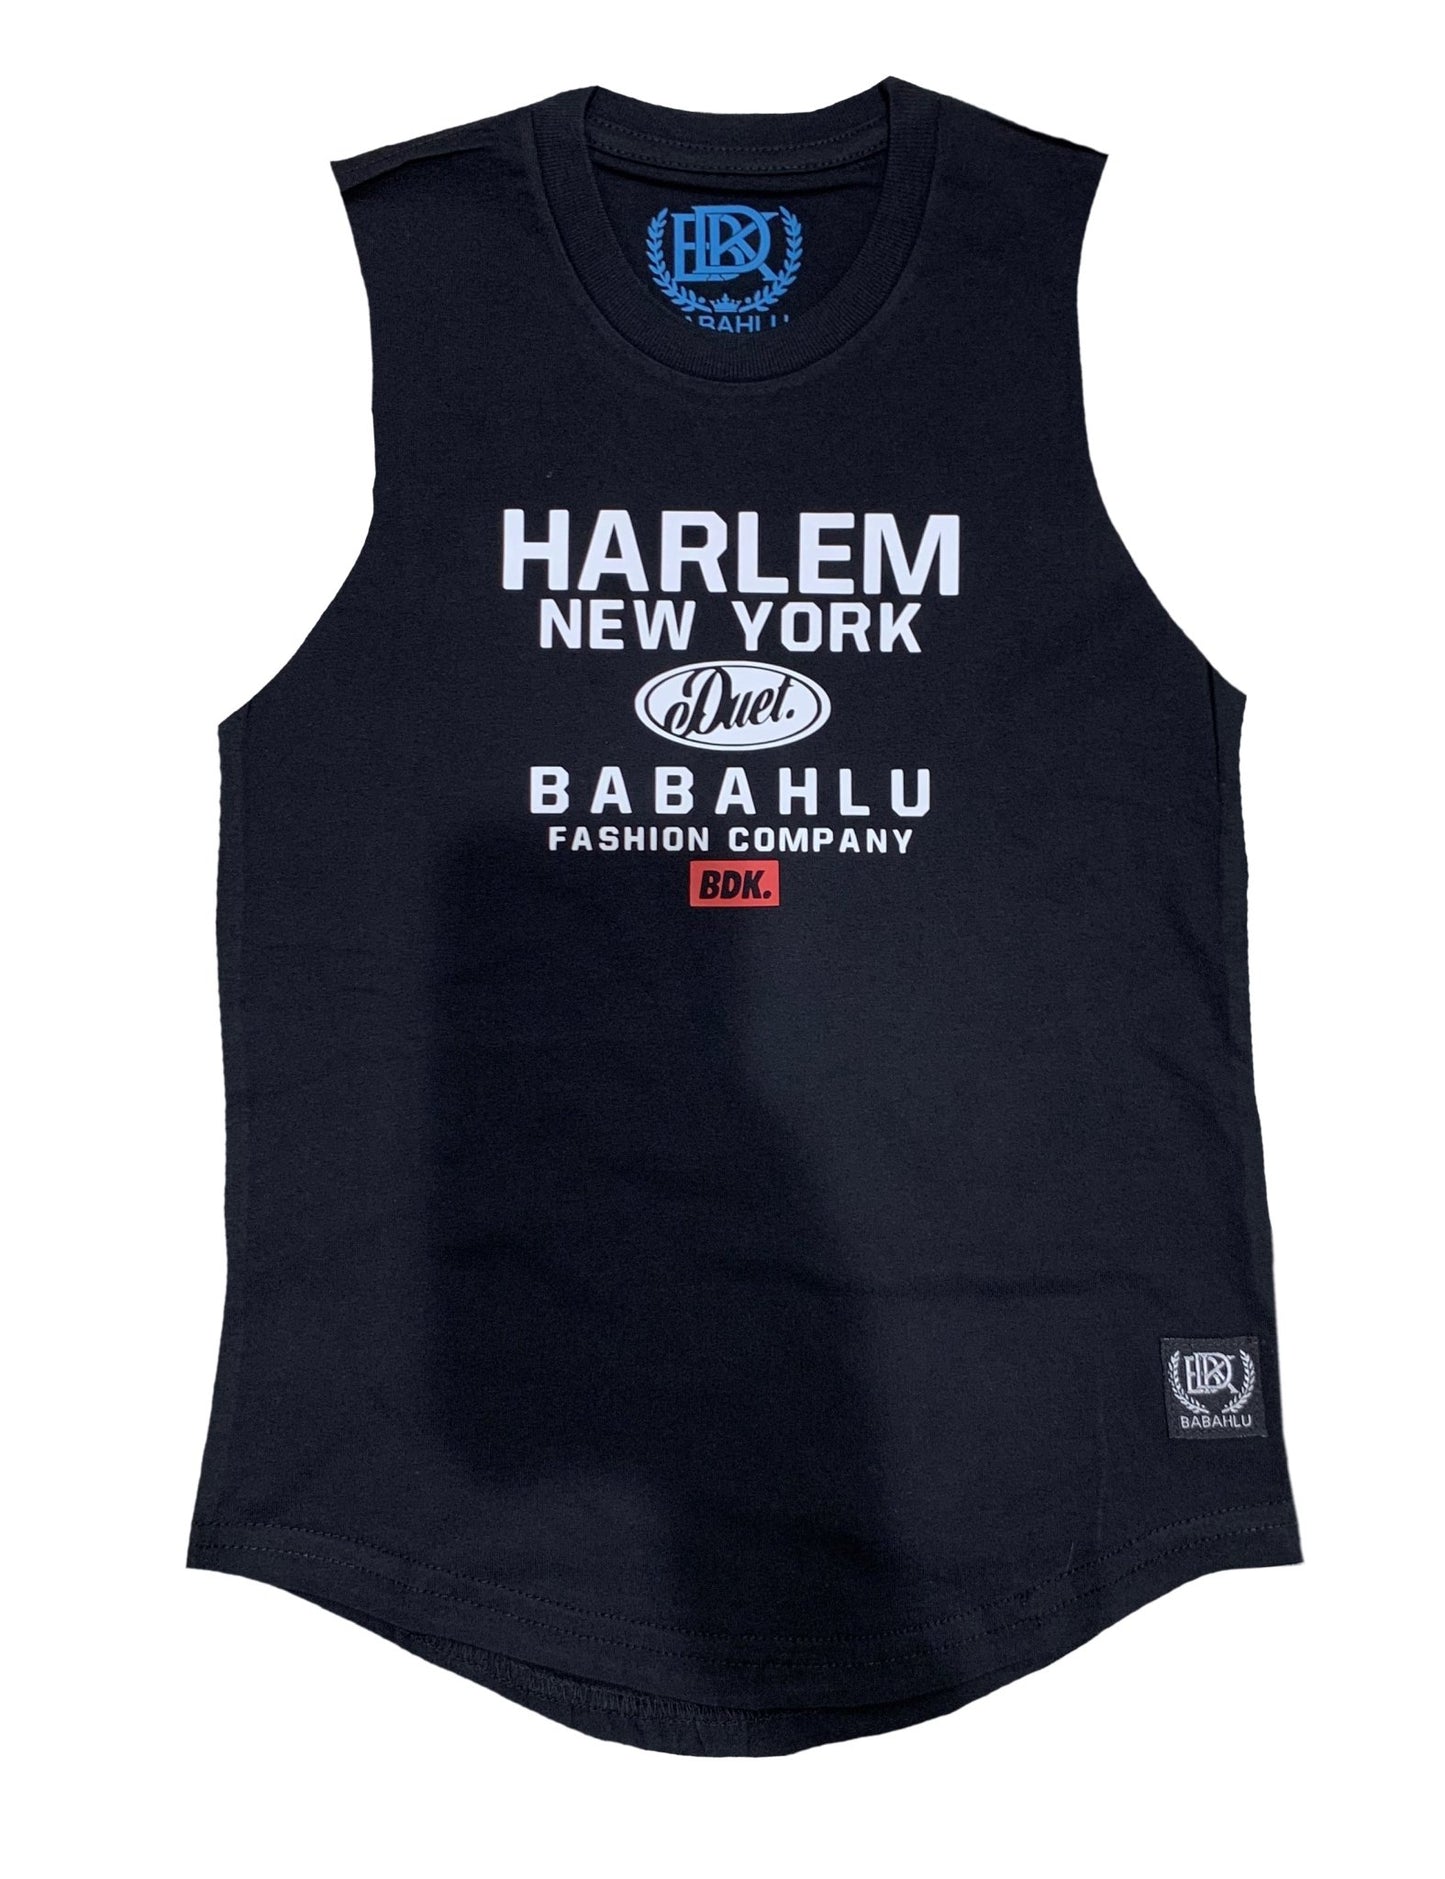 Muscle Tank HARLEM New York Duet - Babahlu Kids